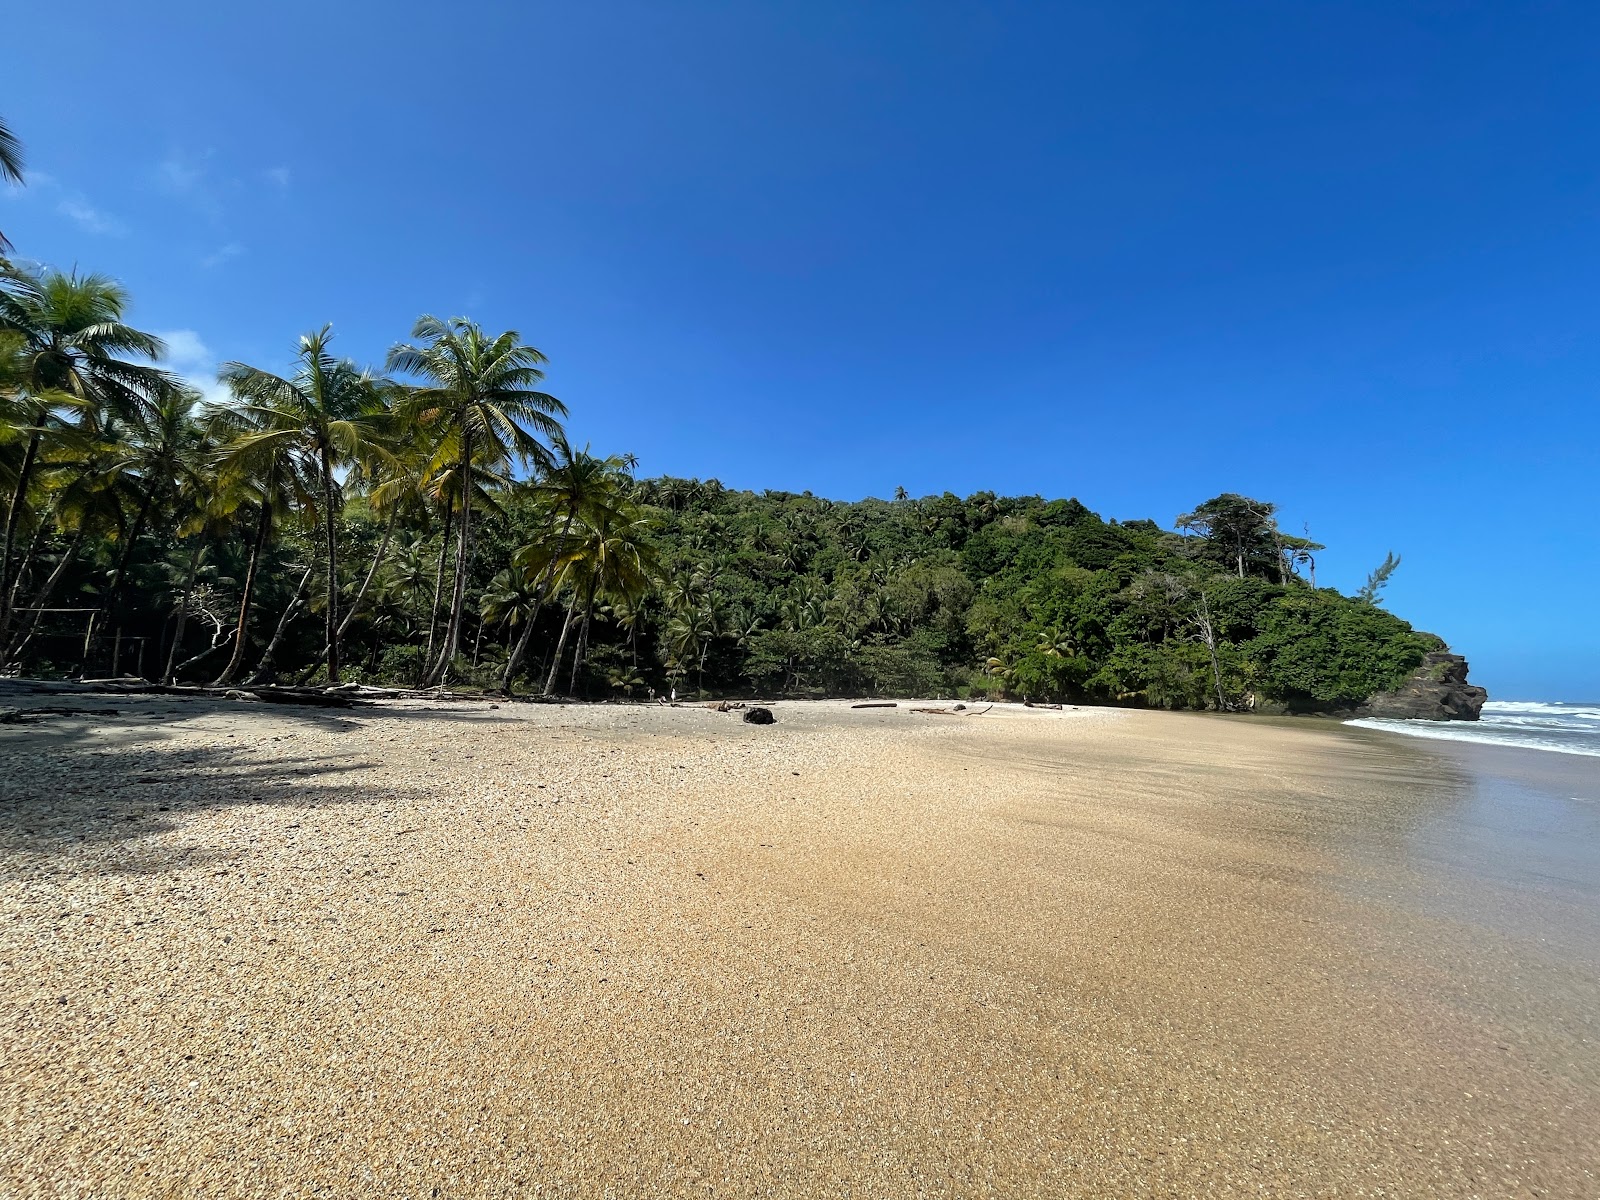 Foto de Yara beach con guijarro fino claro superficie